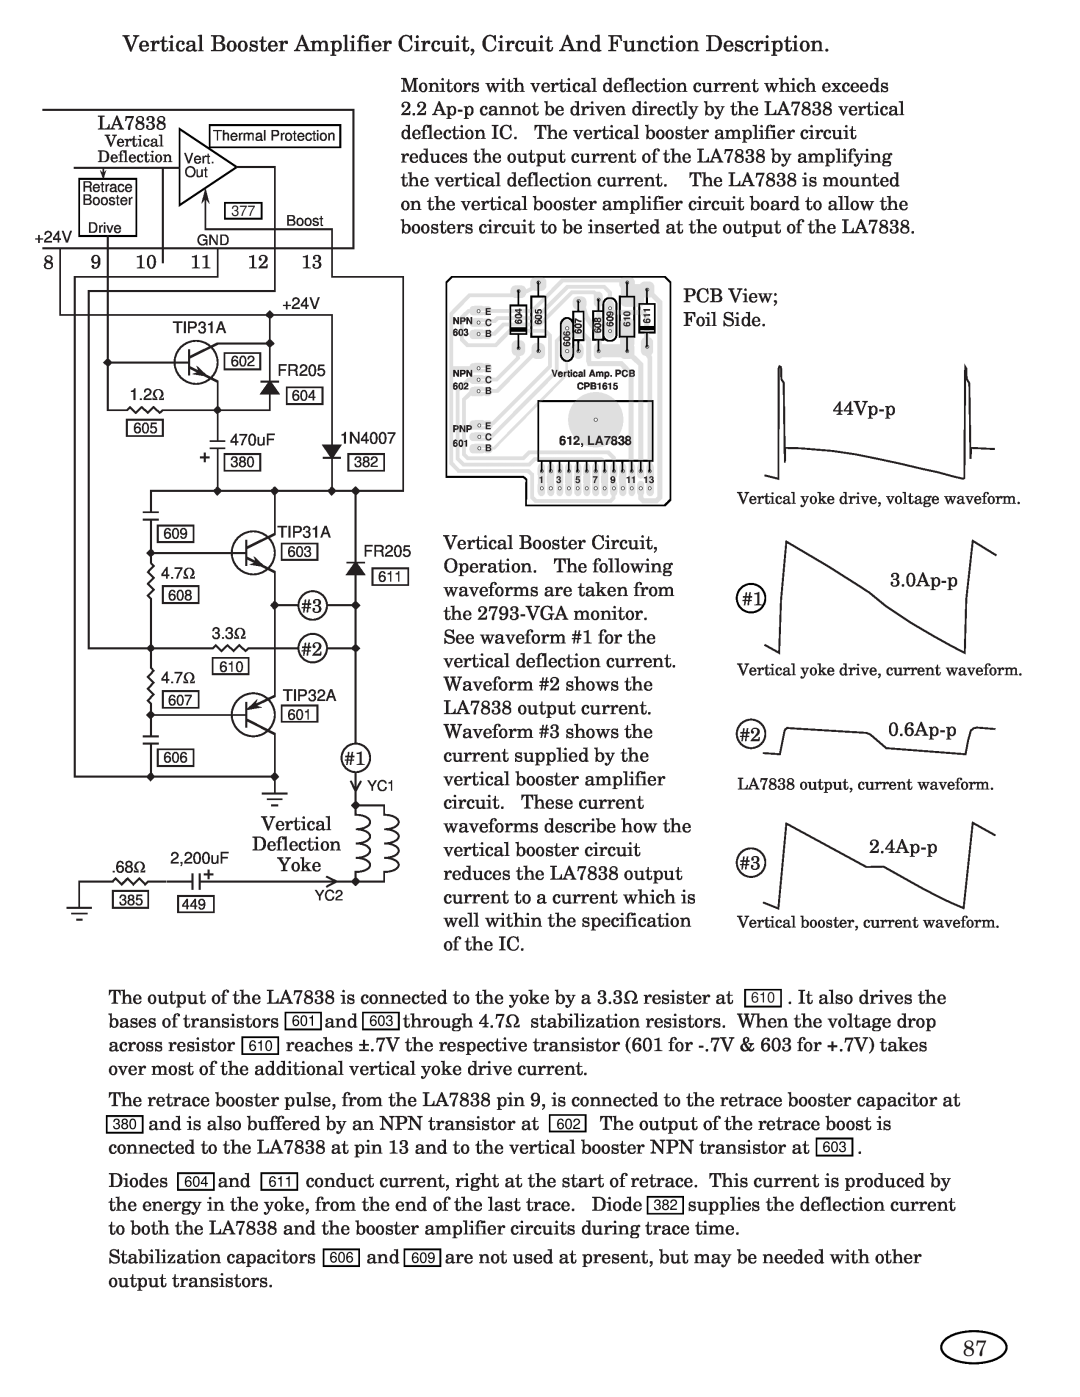 Genius ISO XFR-100W, ISO XFR-75W, 2093 Vertical Booster Amplifier Circuit, Circuit And Function Description, 612, LA7838 